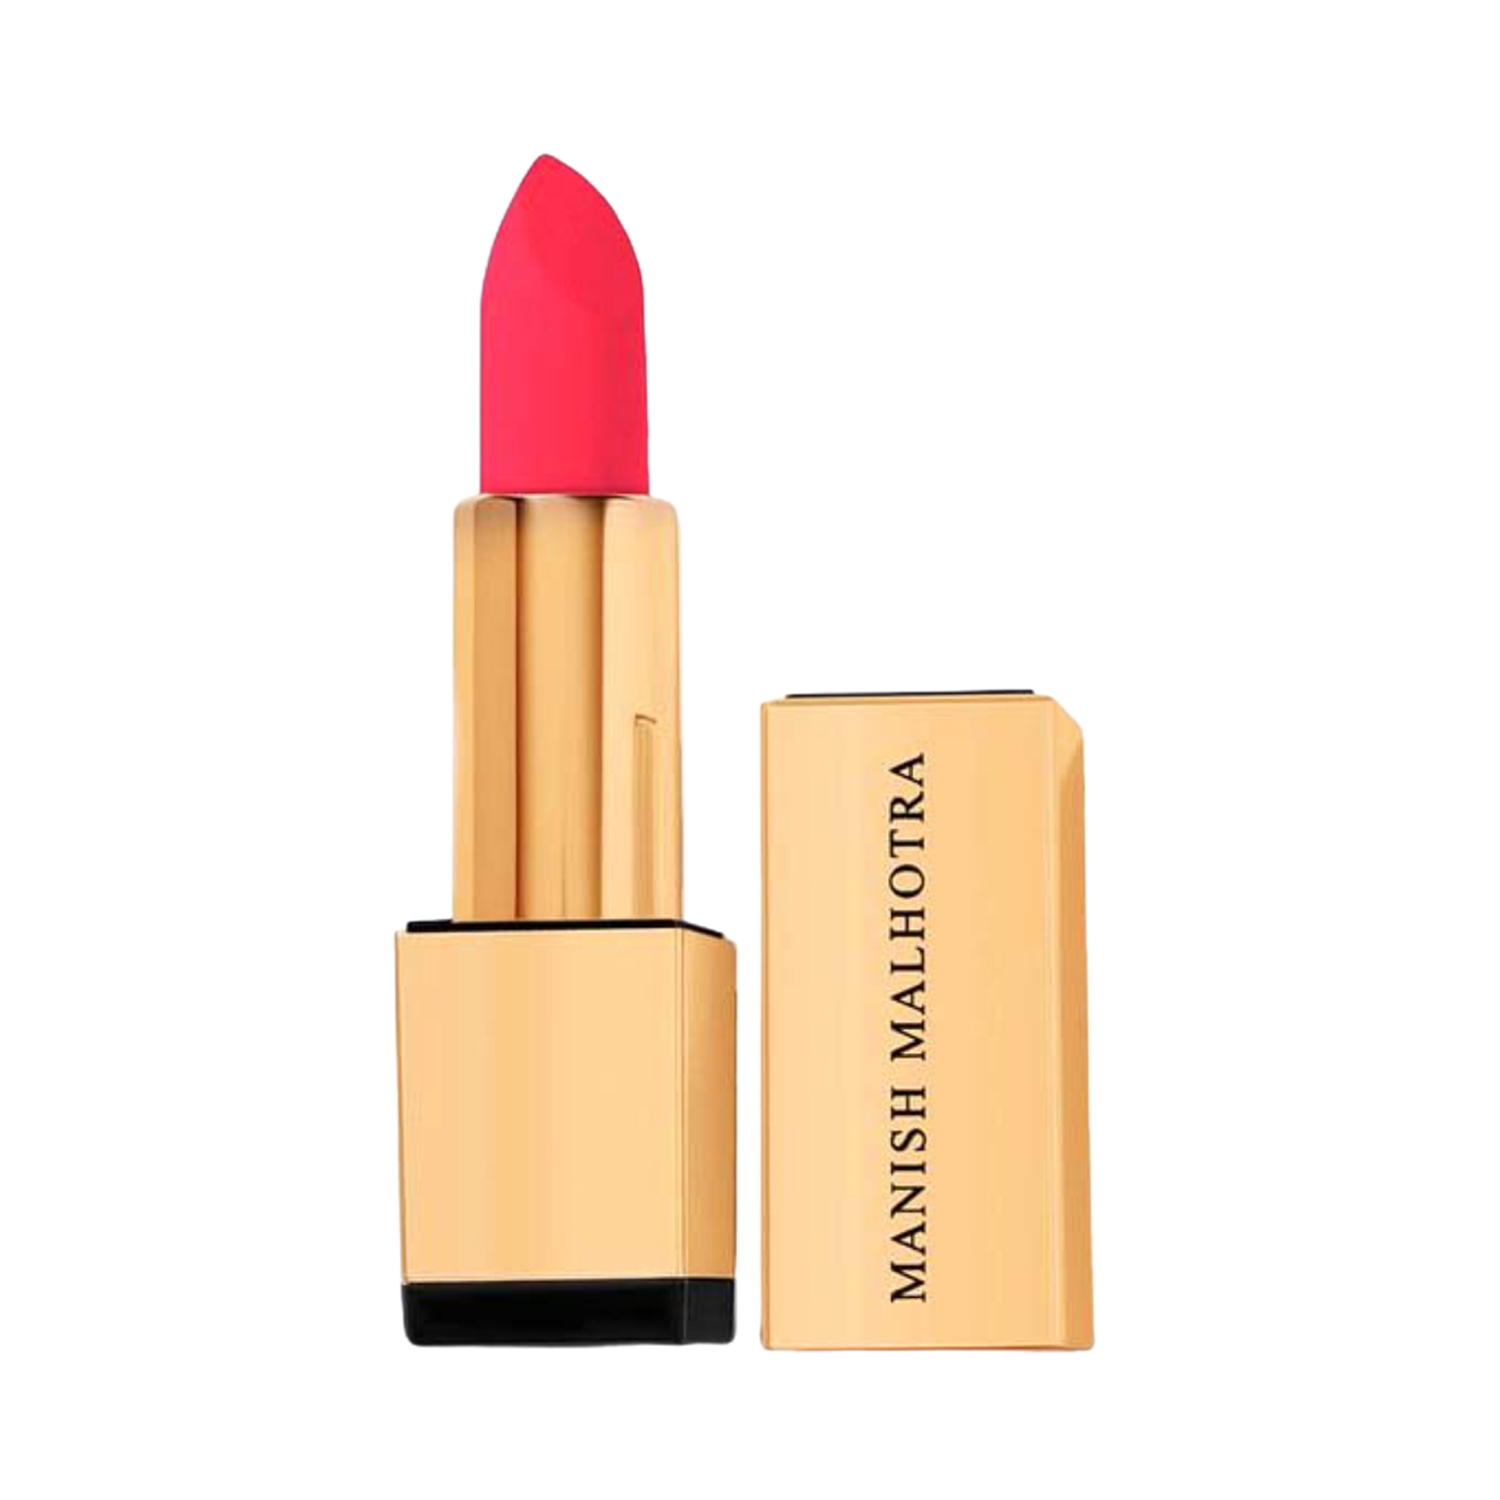 MyGlamm | MyGlamm Manish Malhotra Beauty Powder Matte Lipstick - Promiscuous Pink (4g)